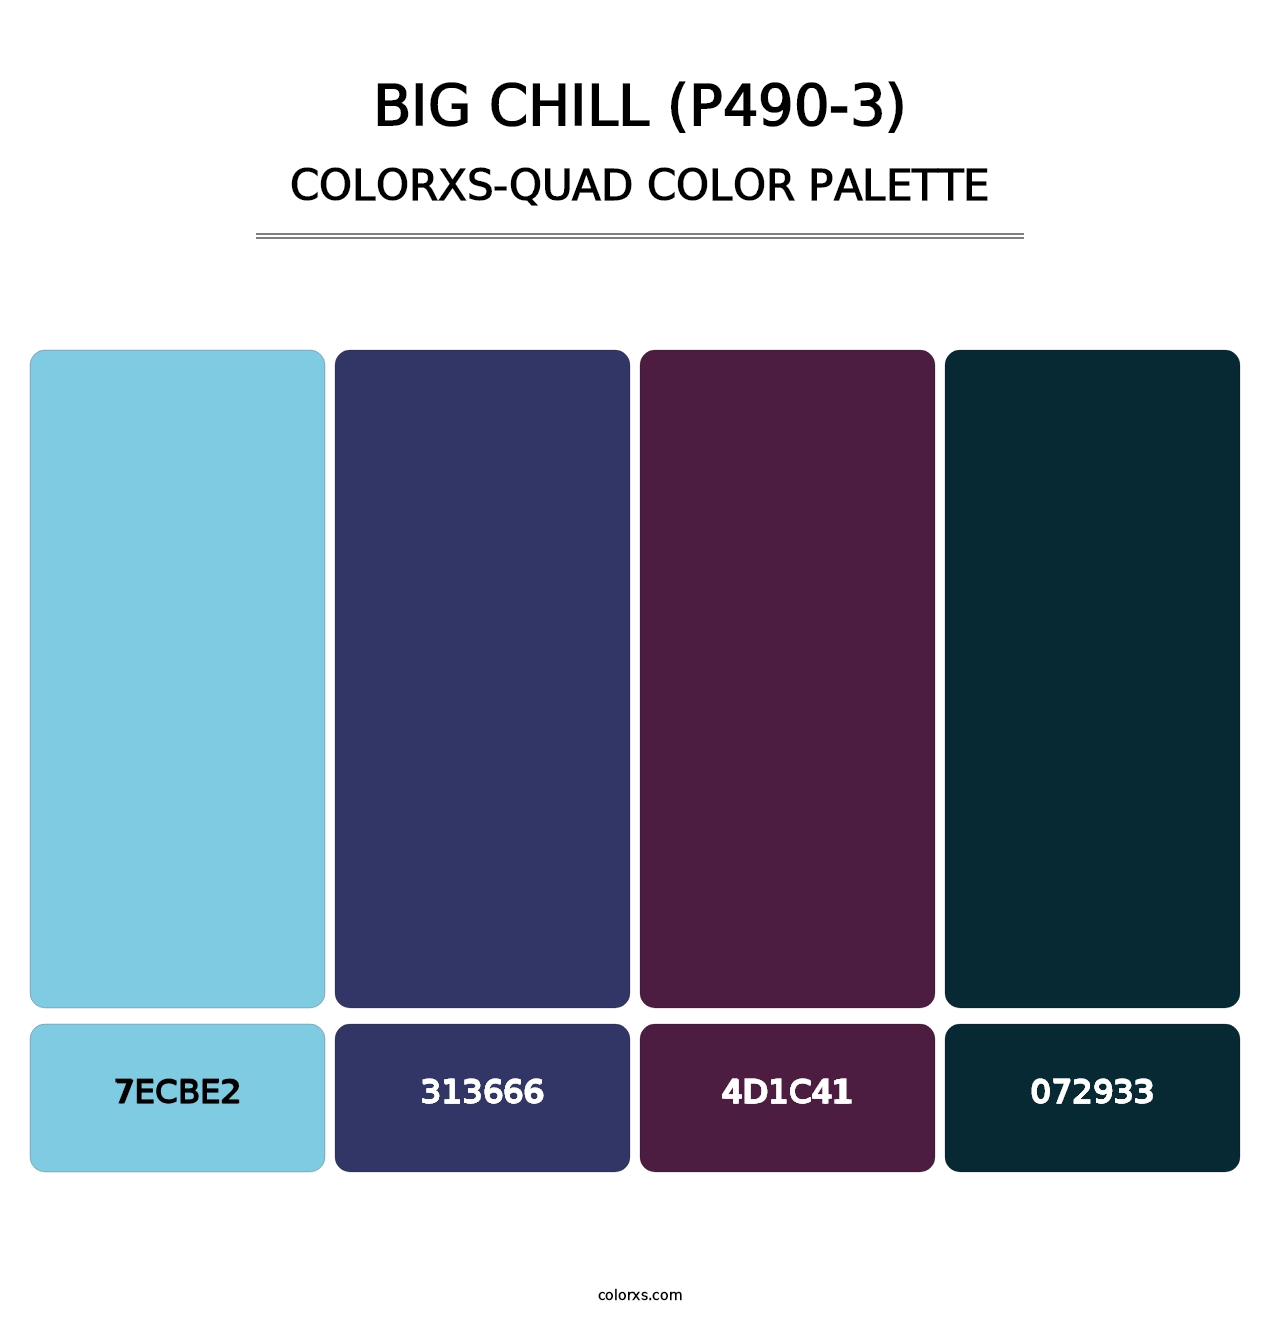 Big Chill (P490-3) - Colorxs Quad Palette